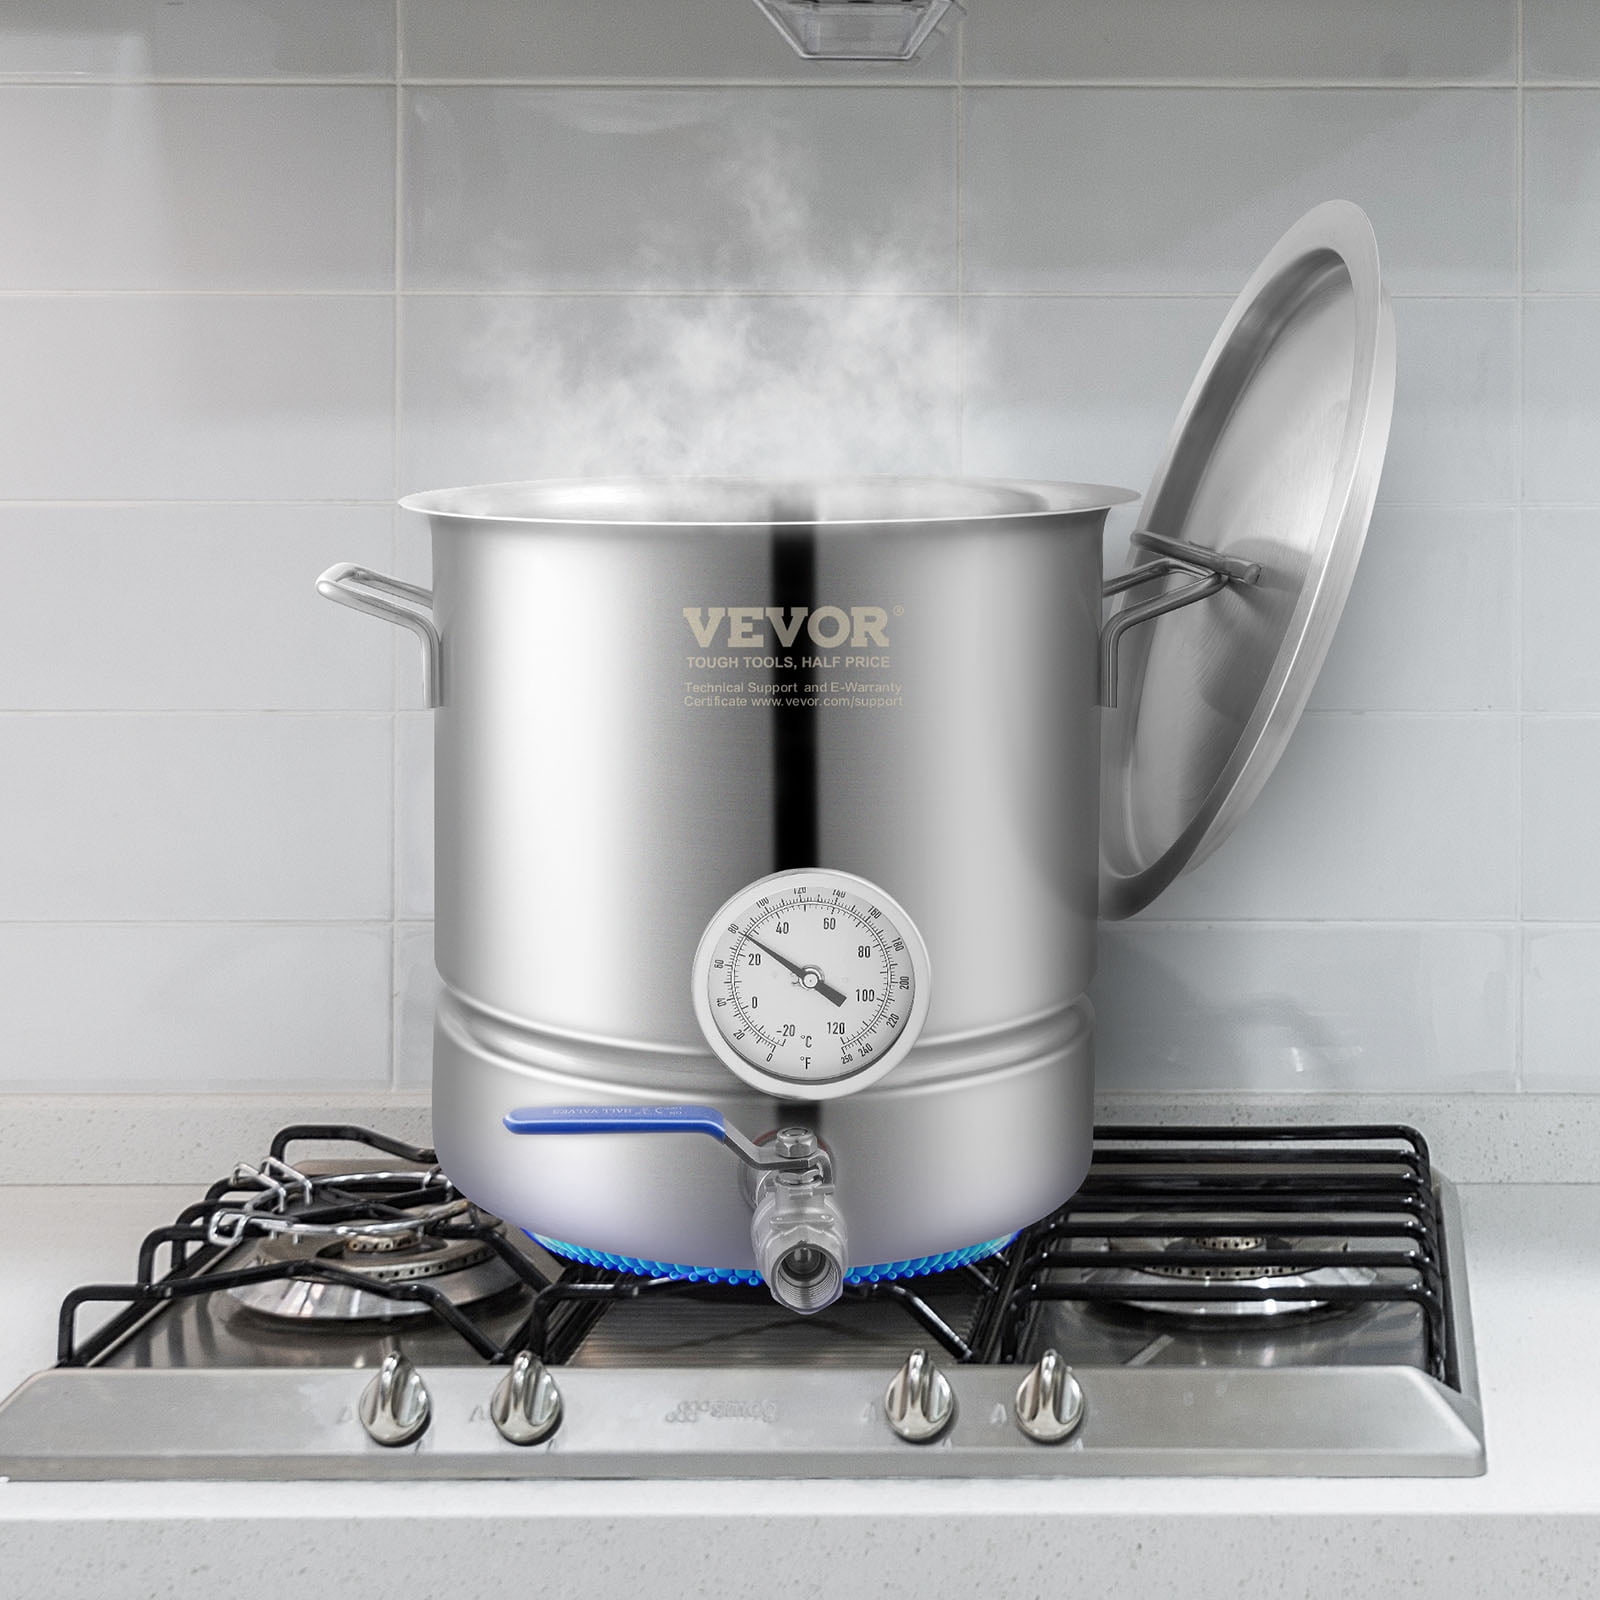 30 Quart (7.5 Gallon) brewing kettle